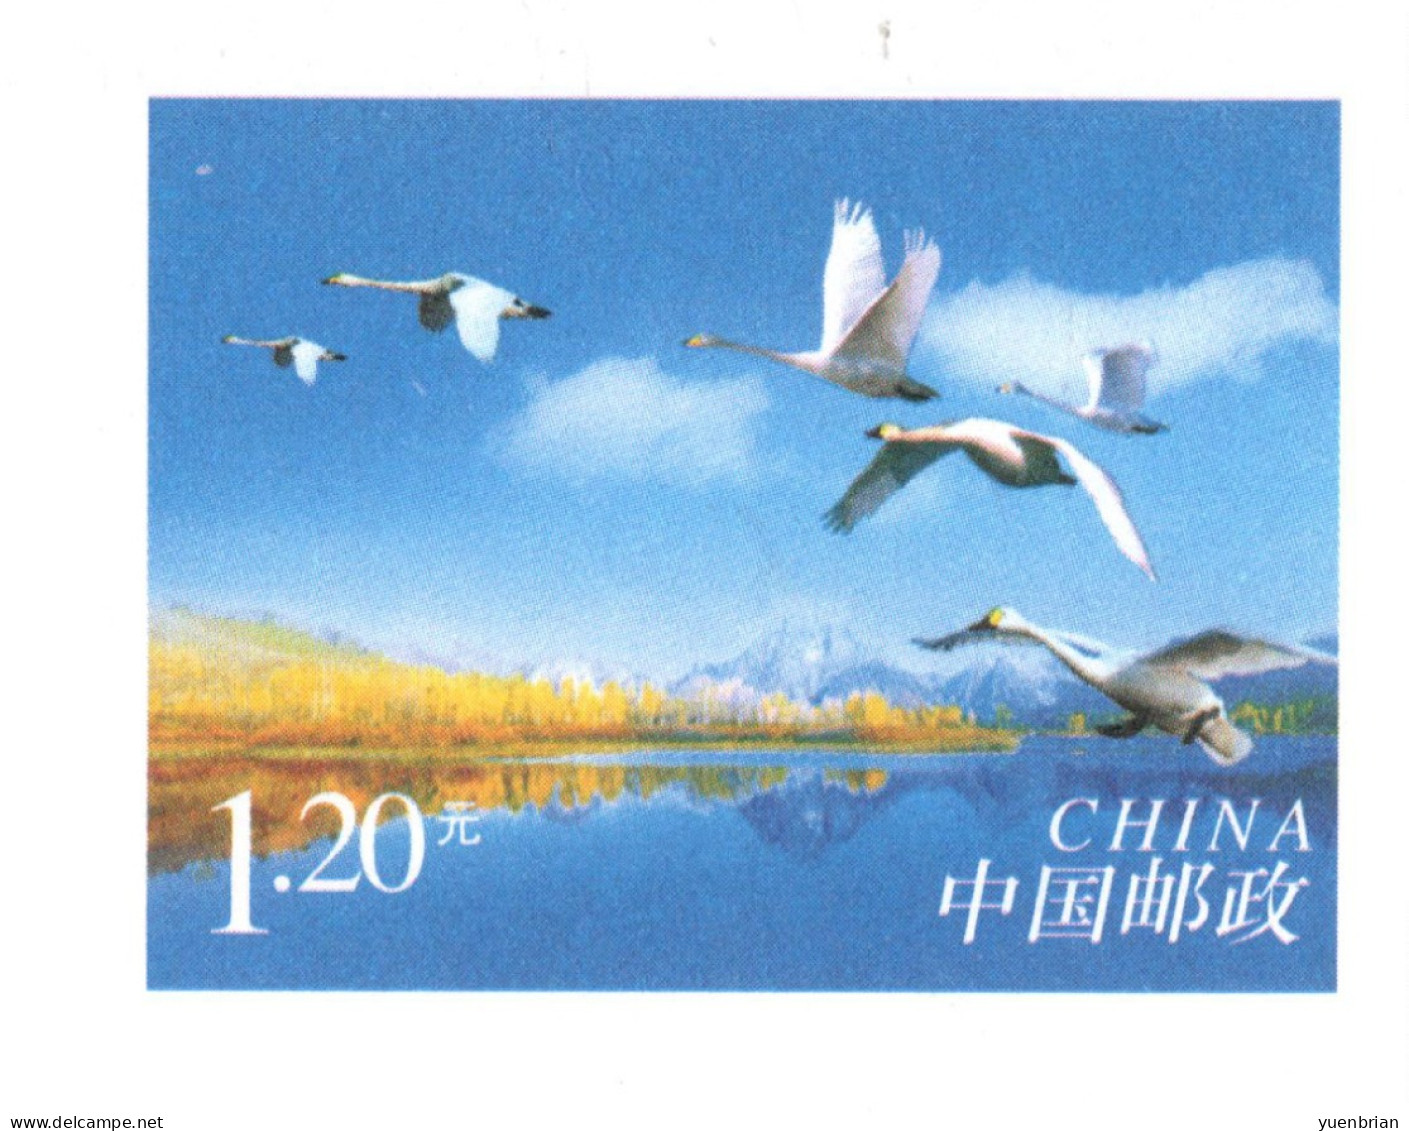 China 2006, Postal Stationary, Pre-Stamped Cover $1.20, MNH** - Cygnes